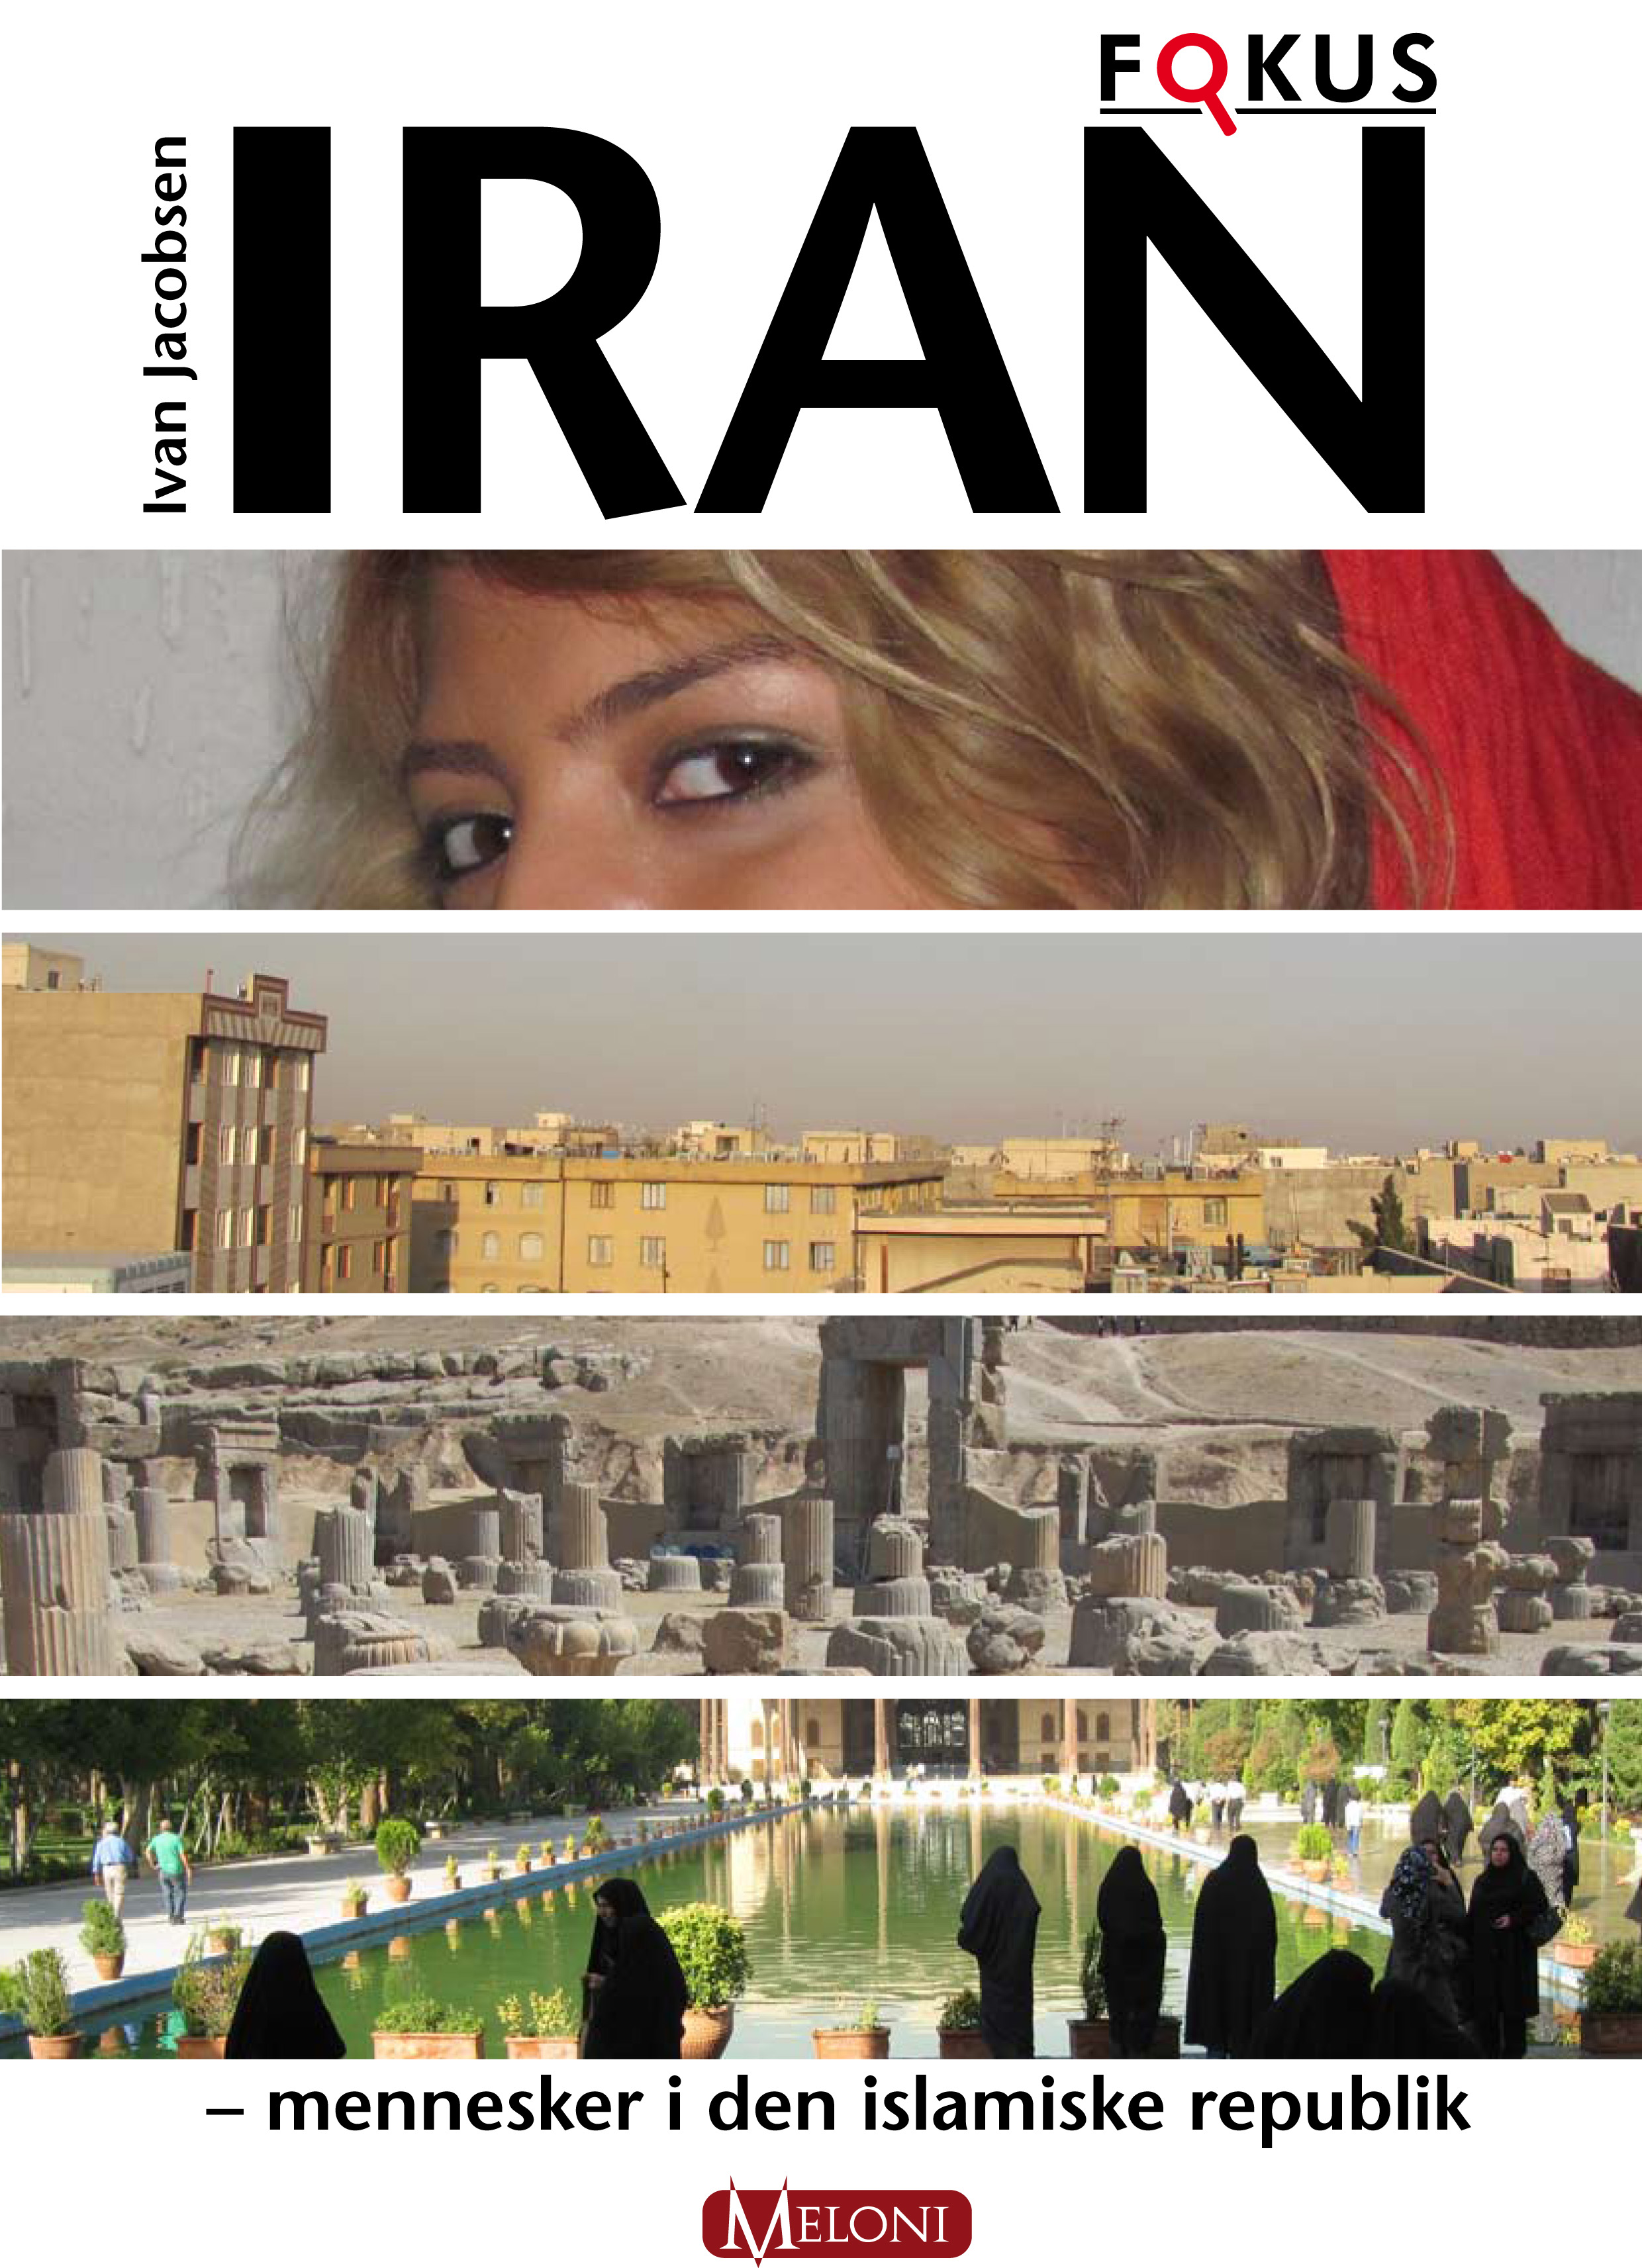 IRAN  mennesker i den islamiske republik